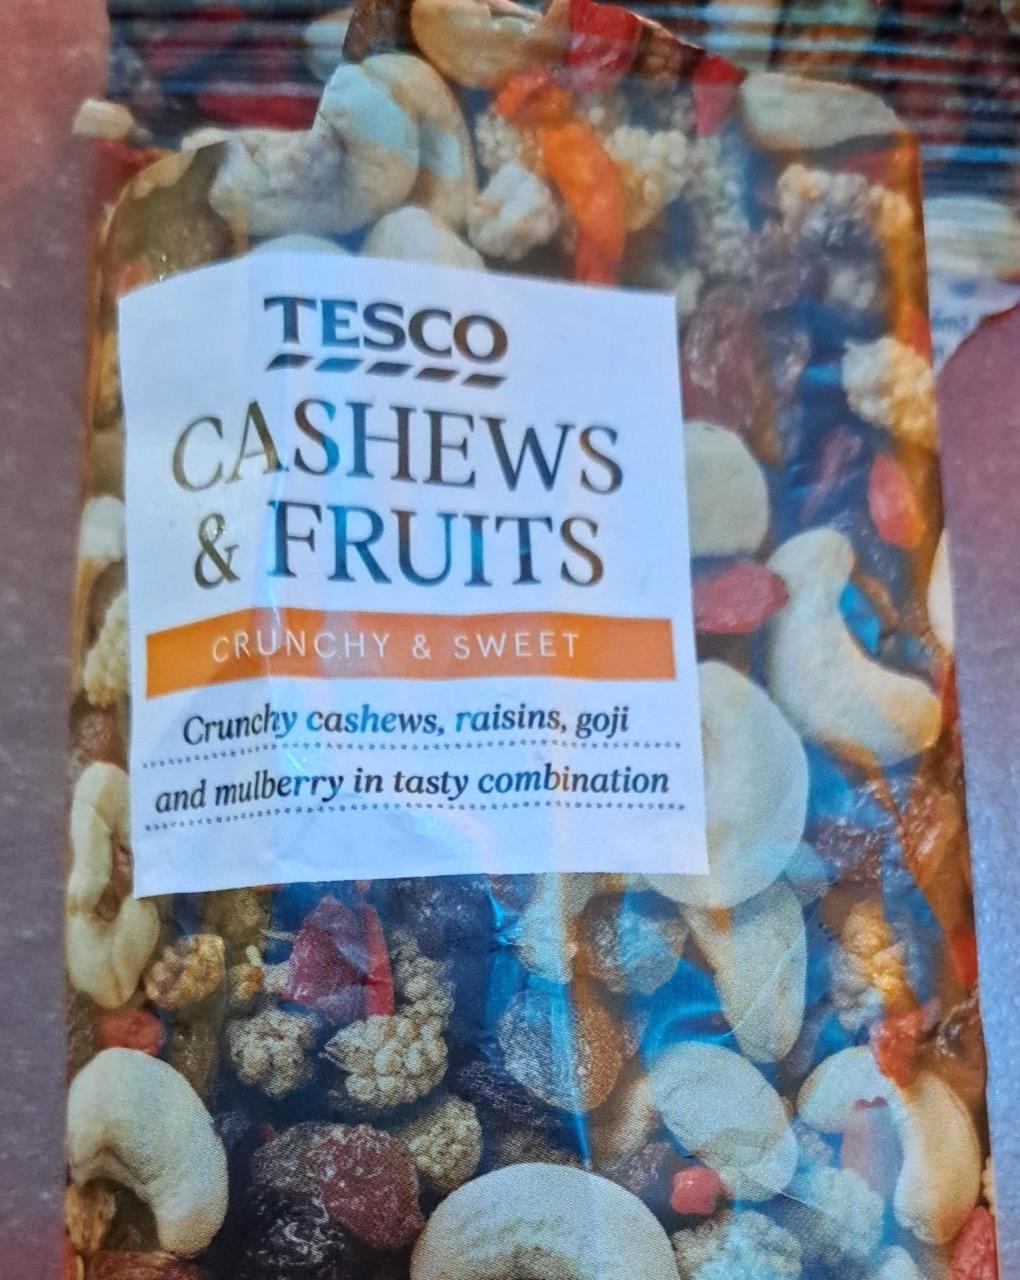 Képek - Cashew & fruits Tesco